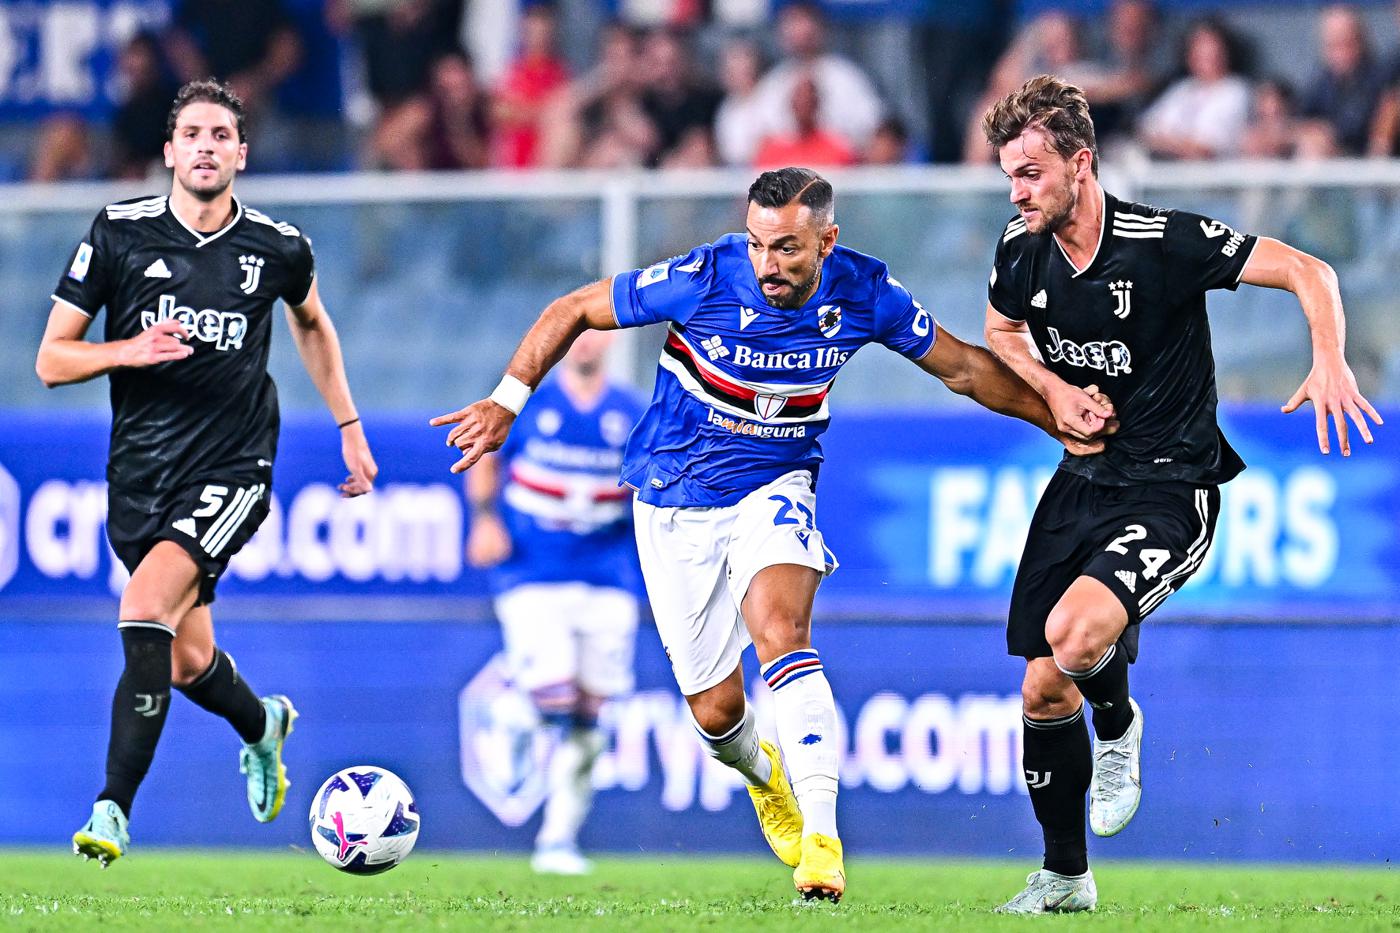 Juventus - Sampdoria - 4:2. Italian Championship, round 26. Match review, statistics.